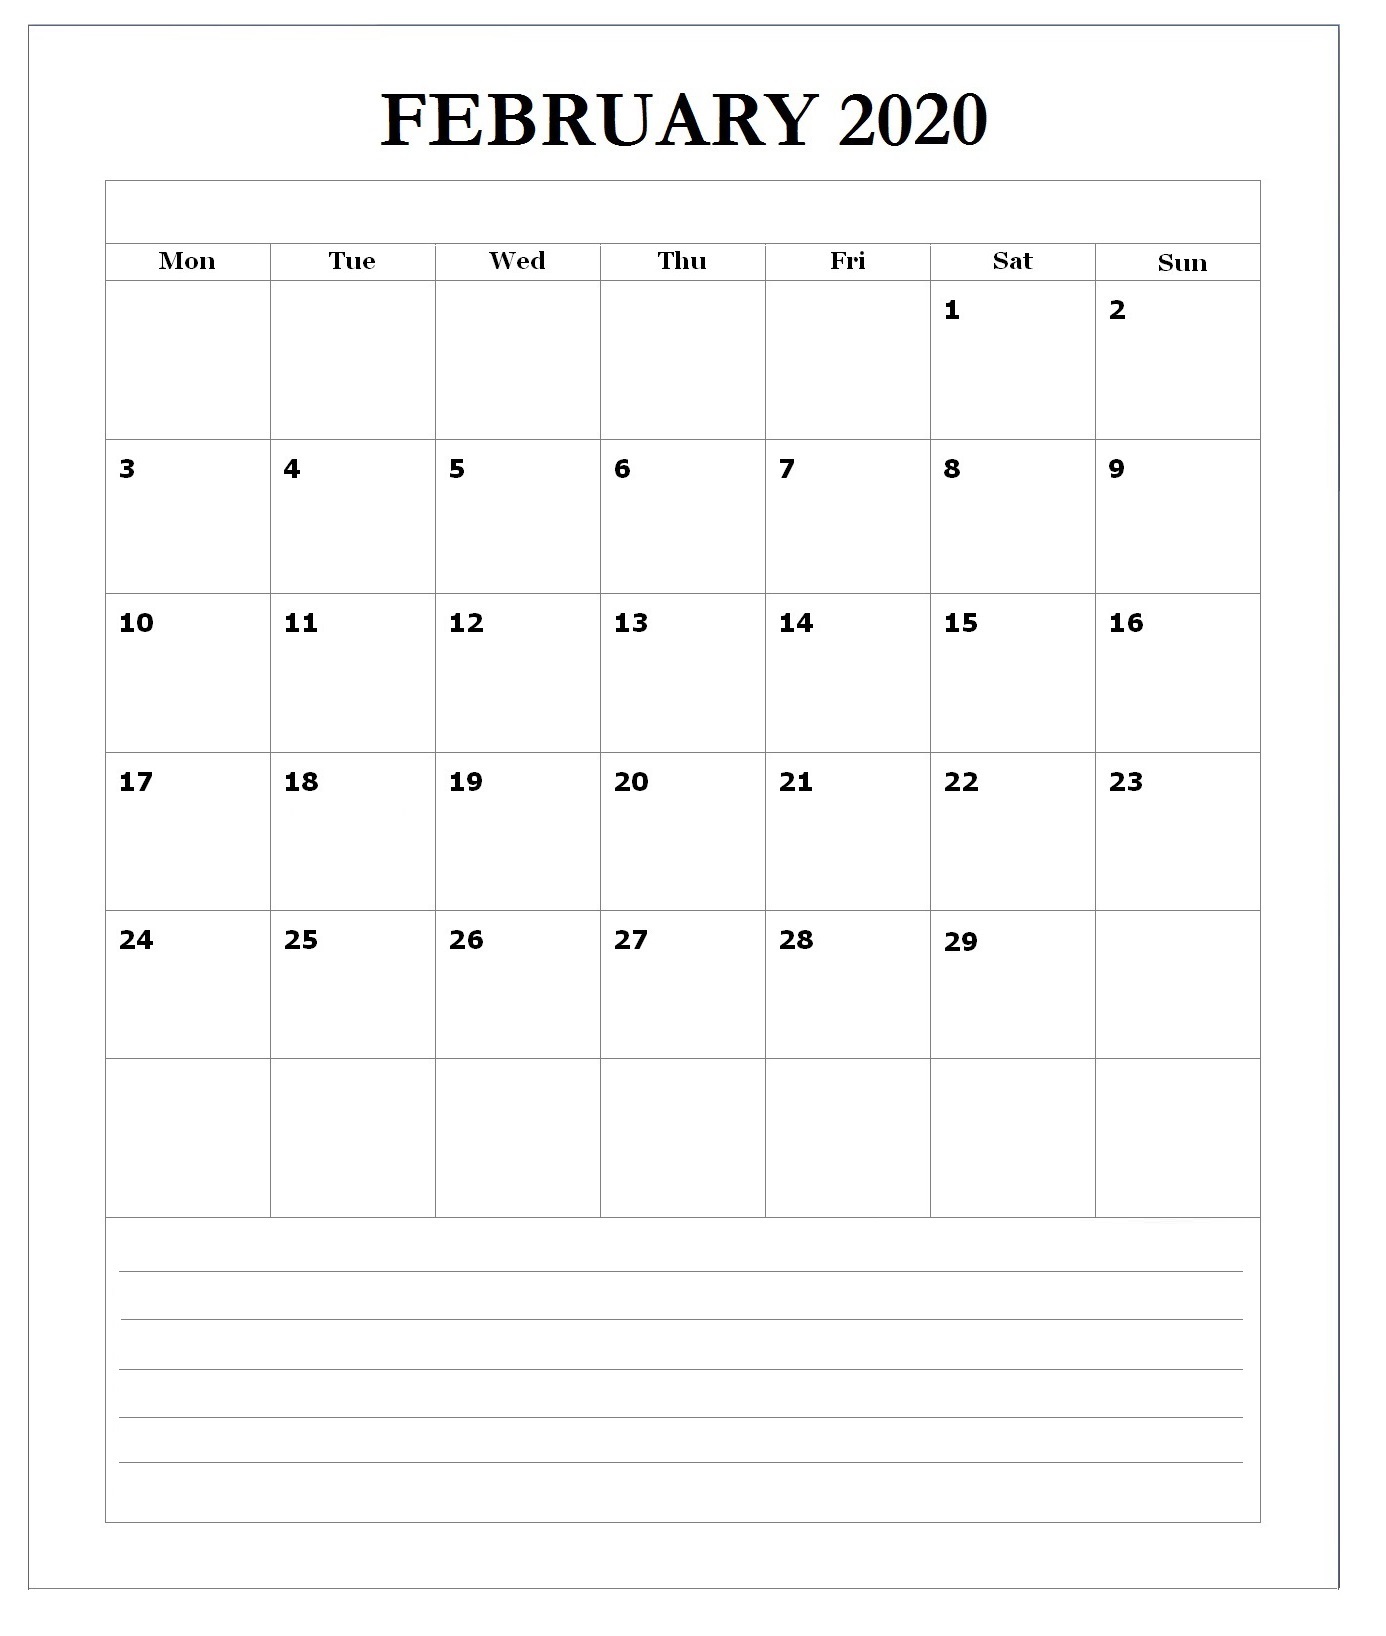 February 2020 Floral Wall Calendar